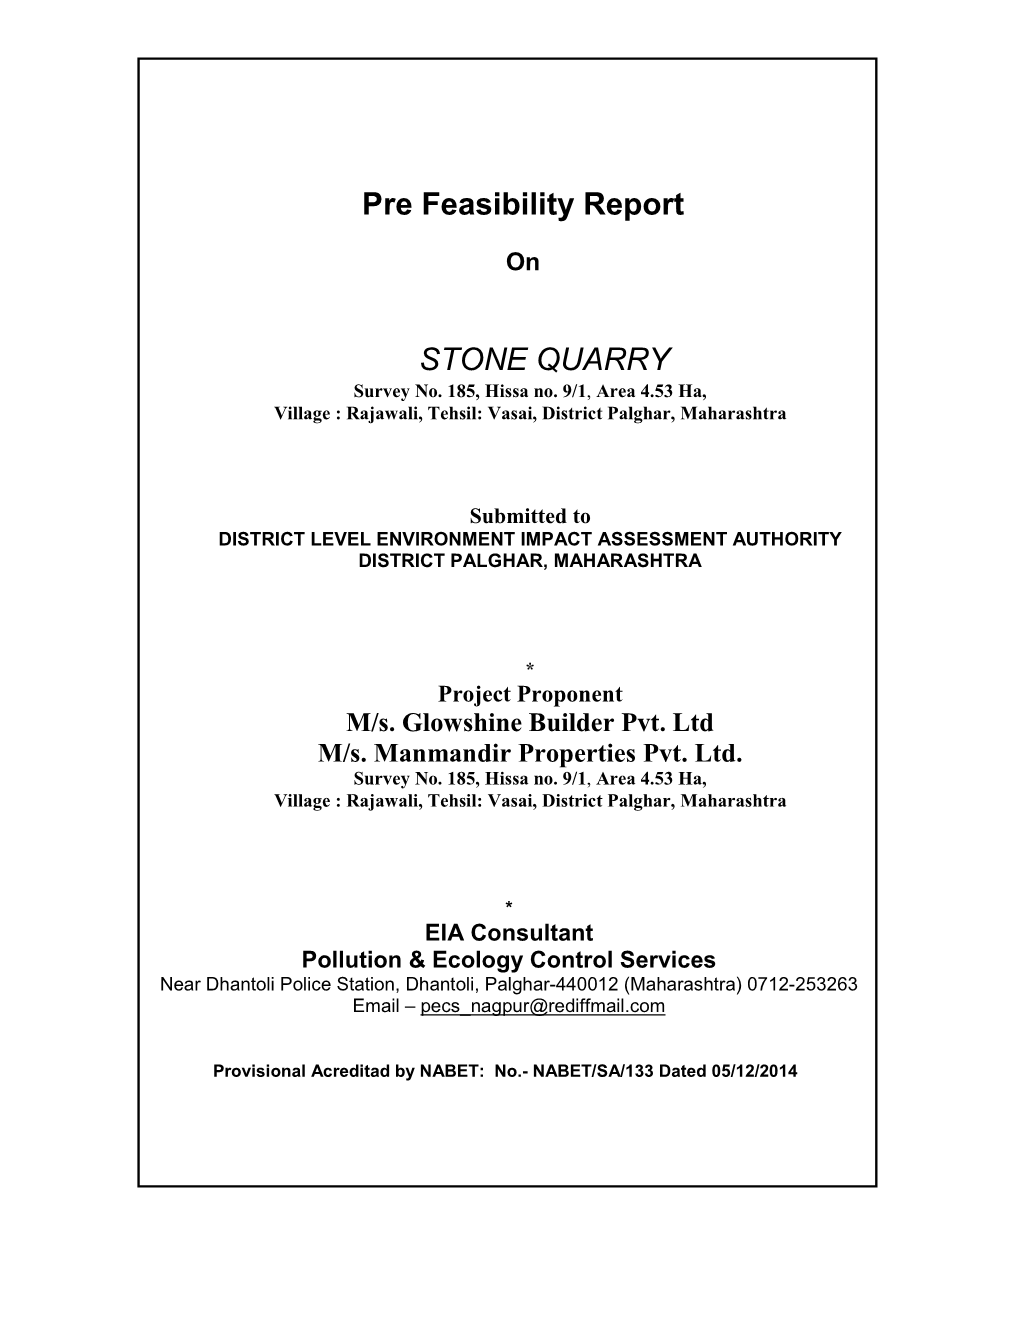 Pre Feasibility Report STONE QUARRY